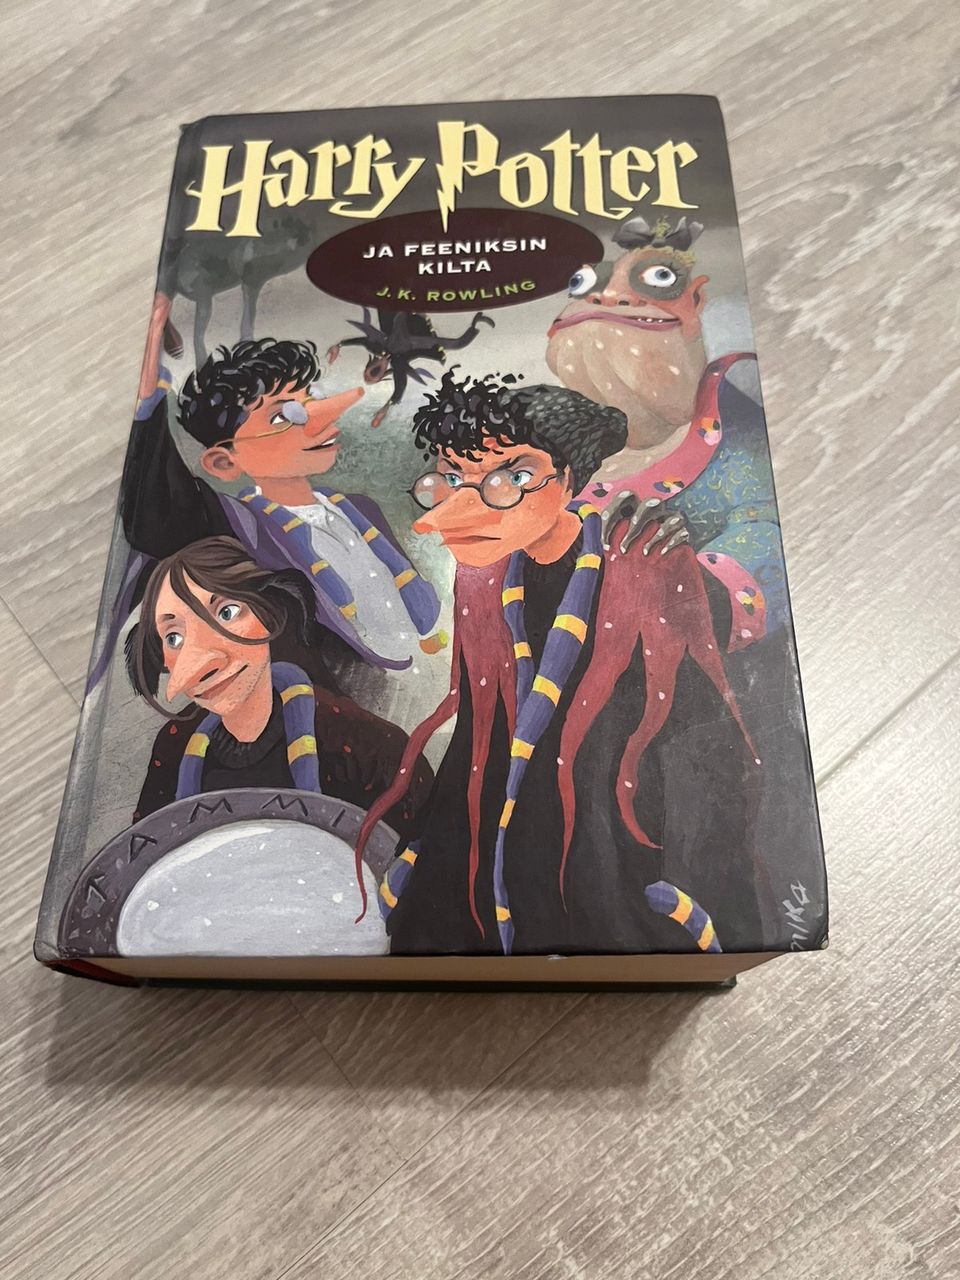 J. K. Rowling - Harry Potter ja Feeniksin kilta